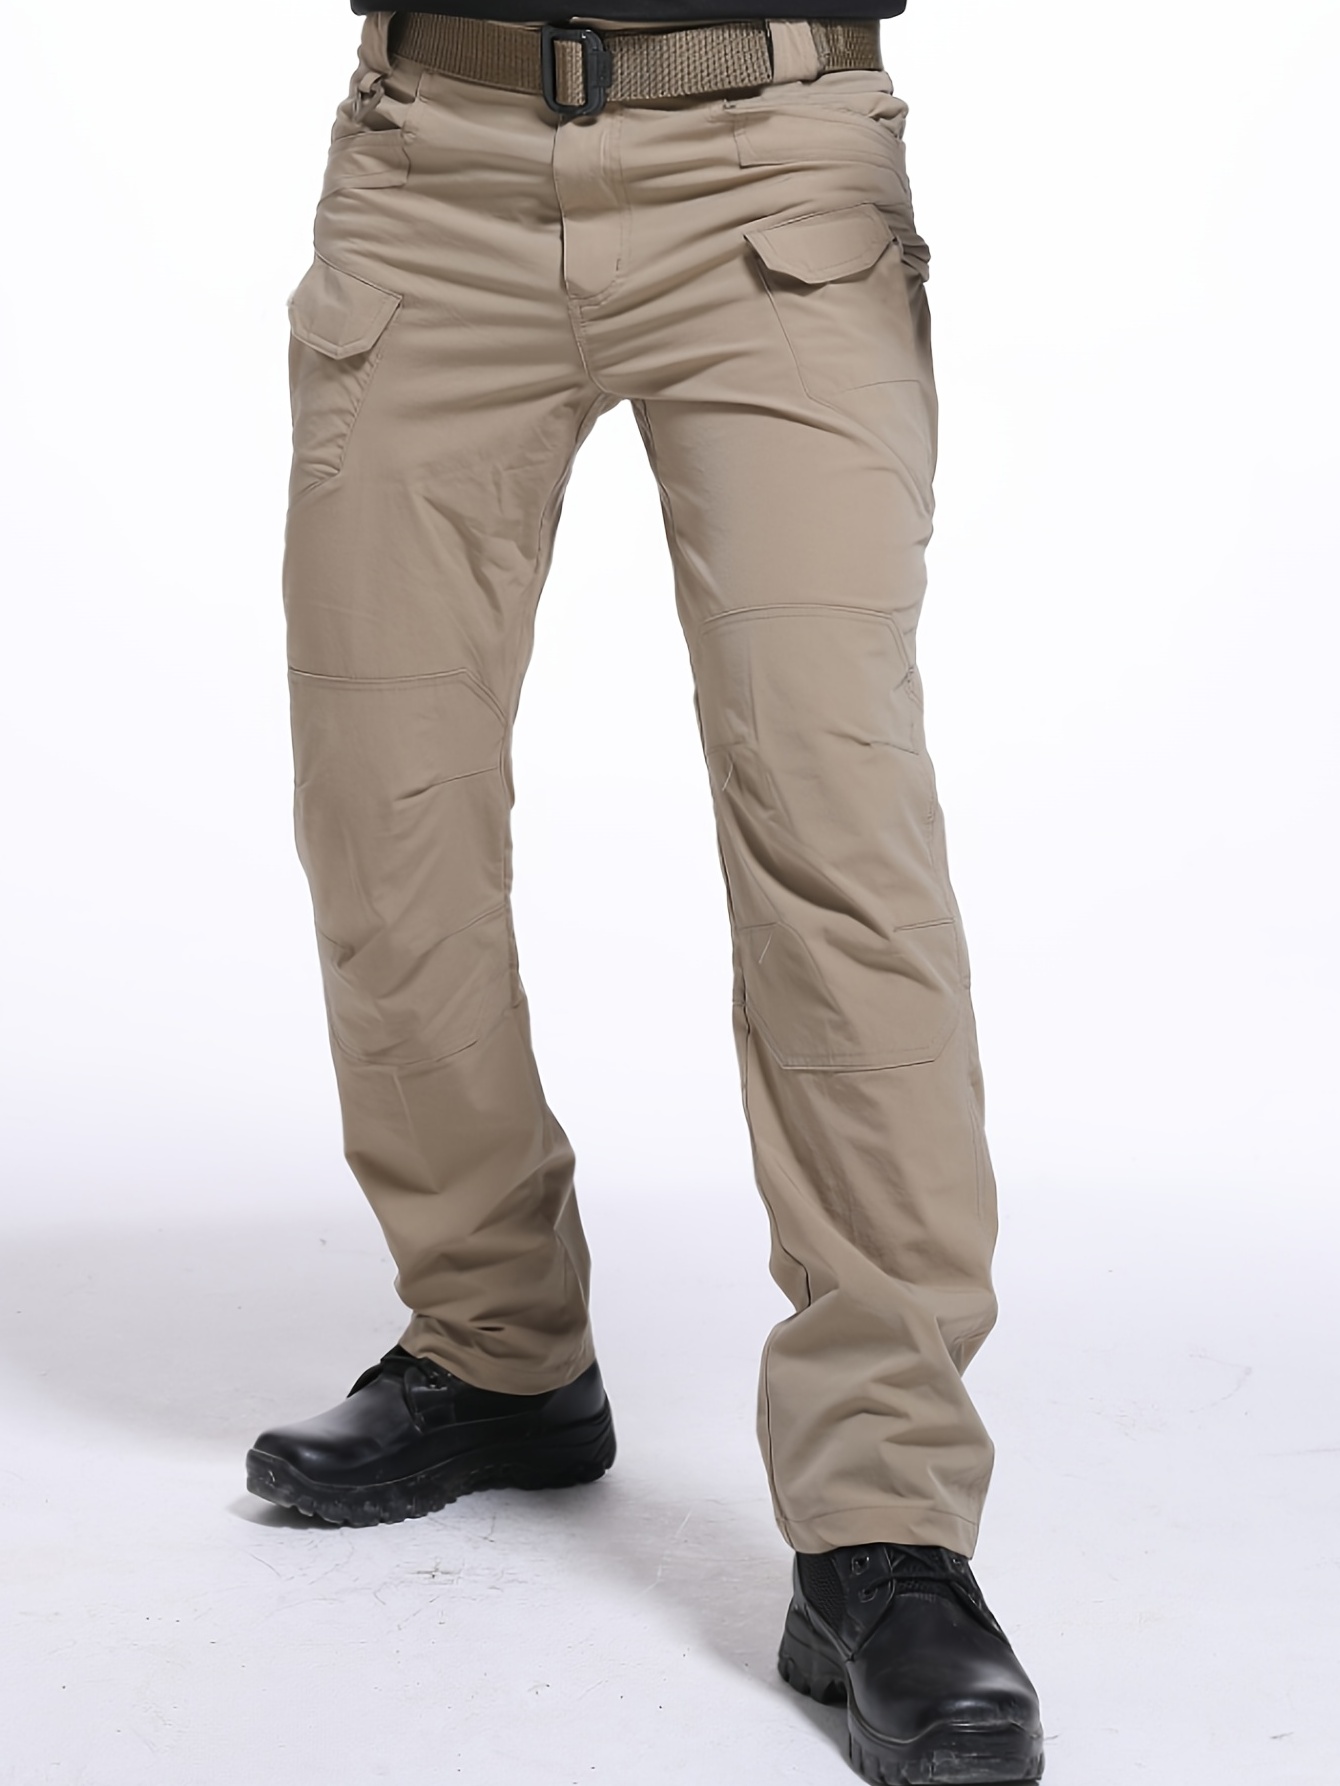 Mens Tactical Tiktok Cargo Pants With Multi Pockets, Waterproof